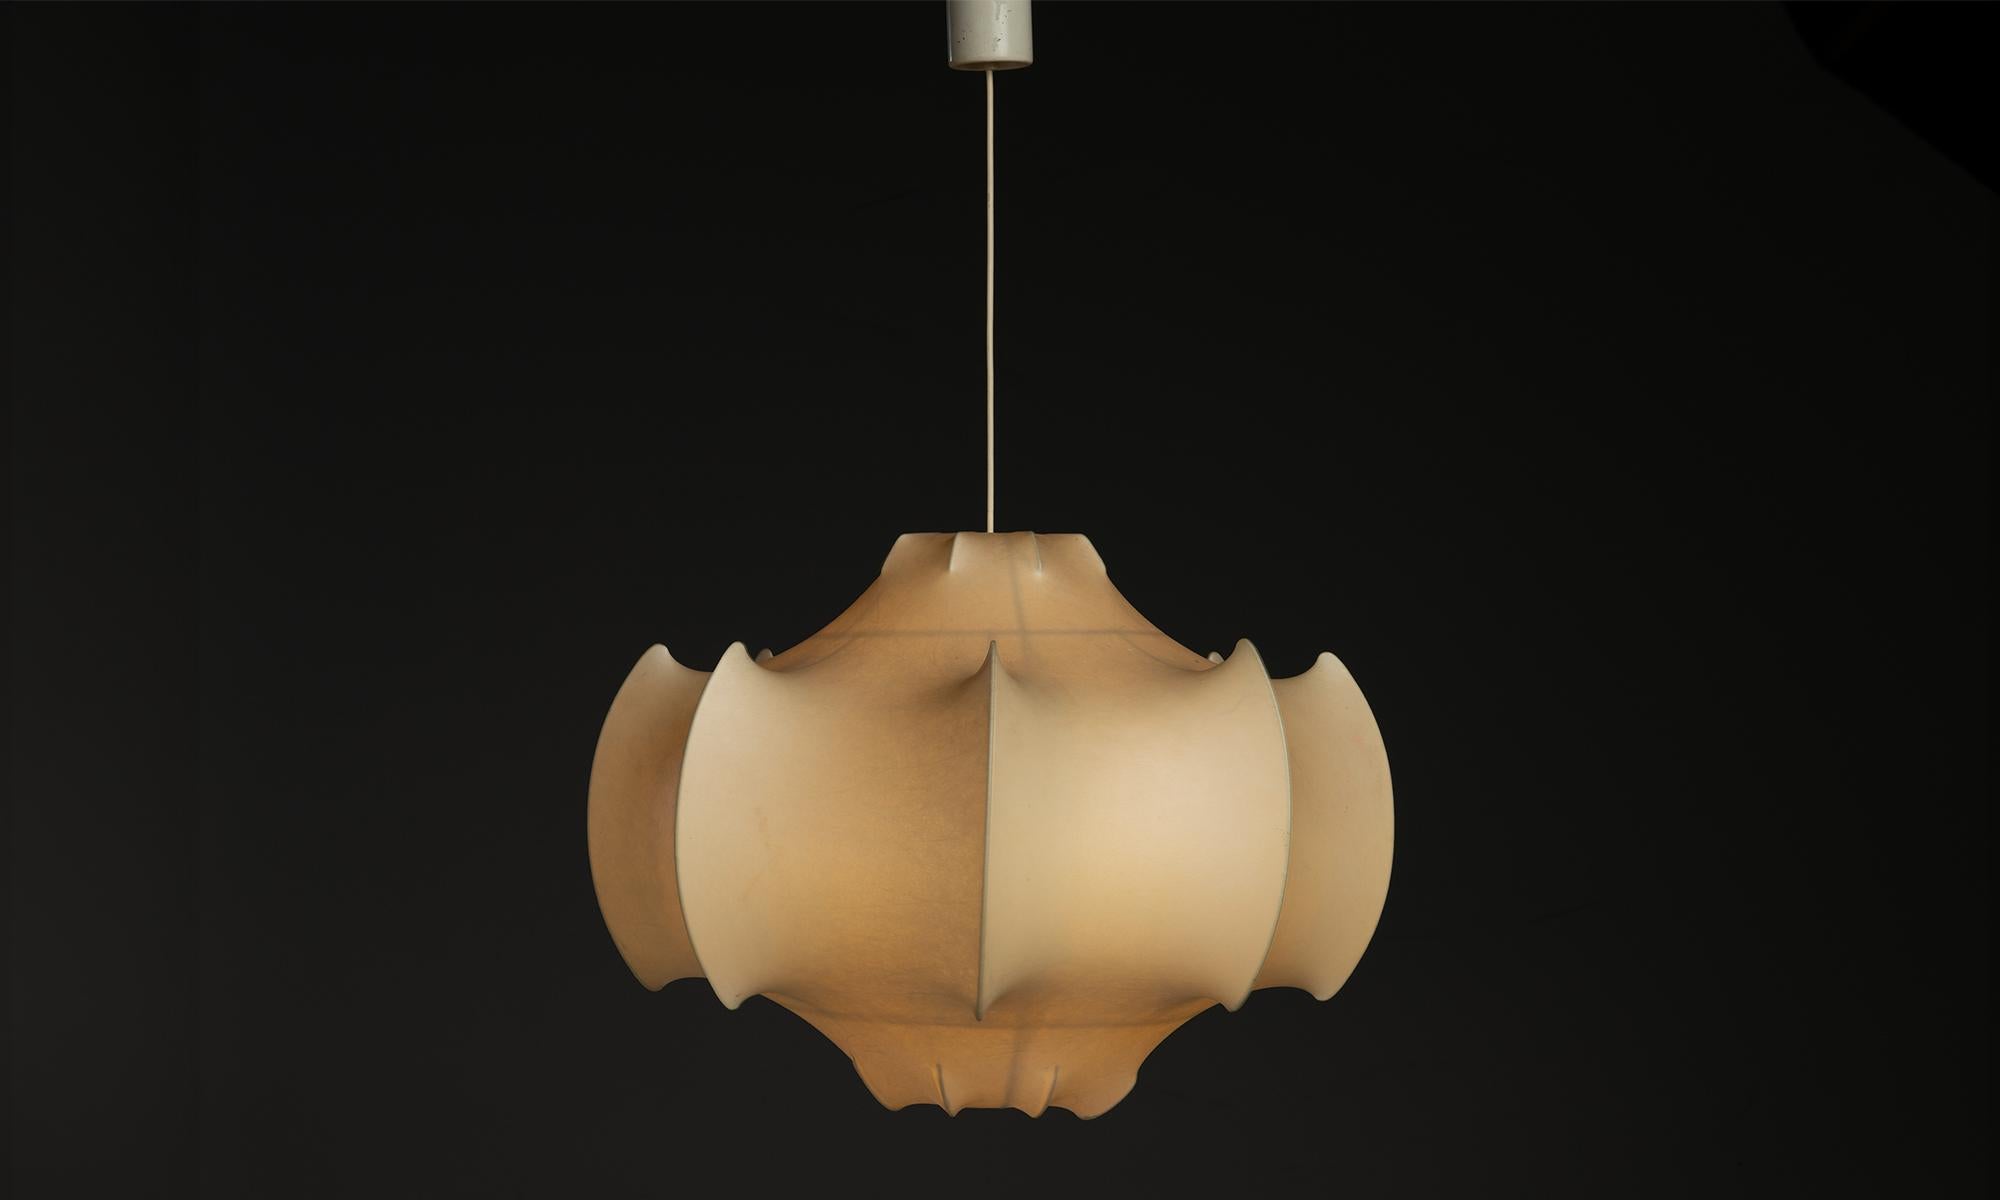 Cocoon Pendant by Castiglioni

Italy circa 1960

Designed by Achille Castiglioni and Pier Giacomo Castiglione, with internal steel structure and transparent resin cocoon.

29”dia x 18”h ( fixture ) x 45”h (overall)